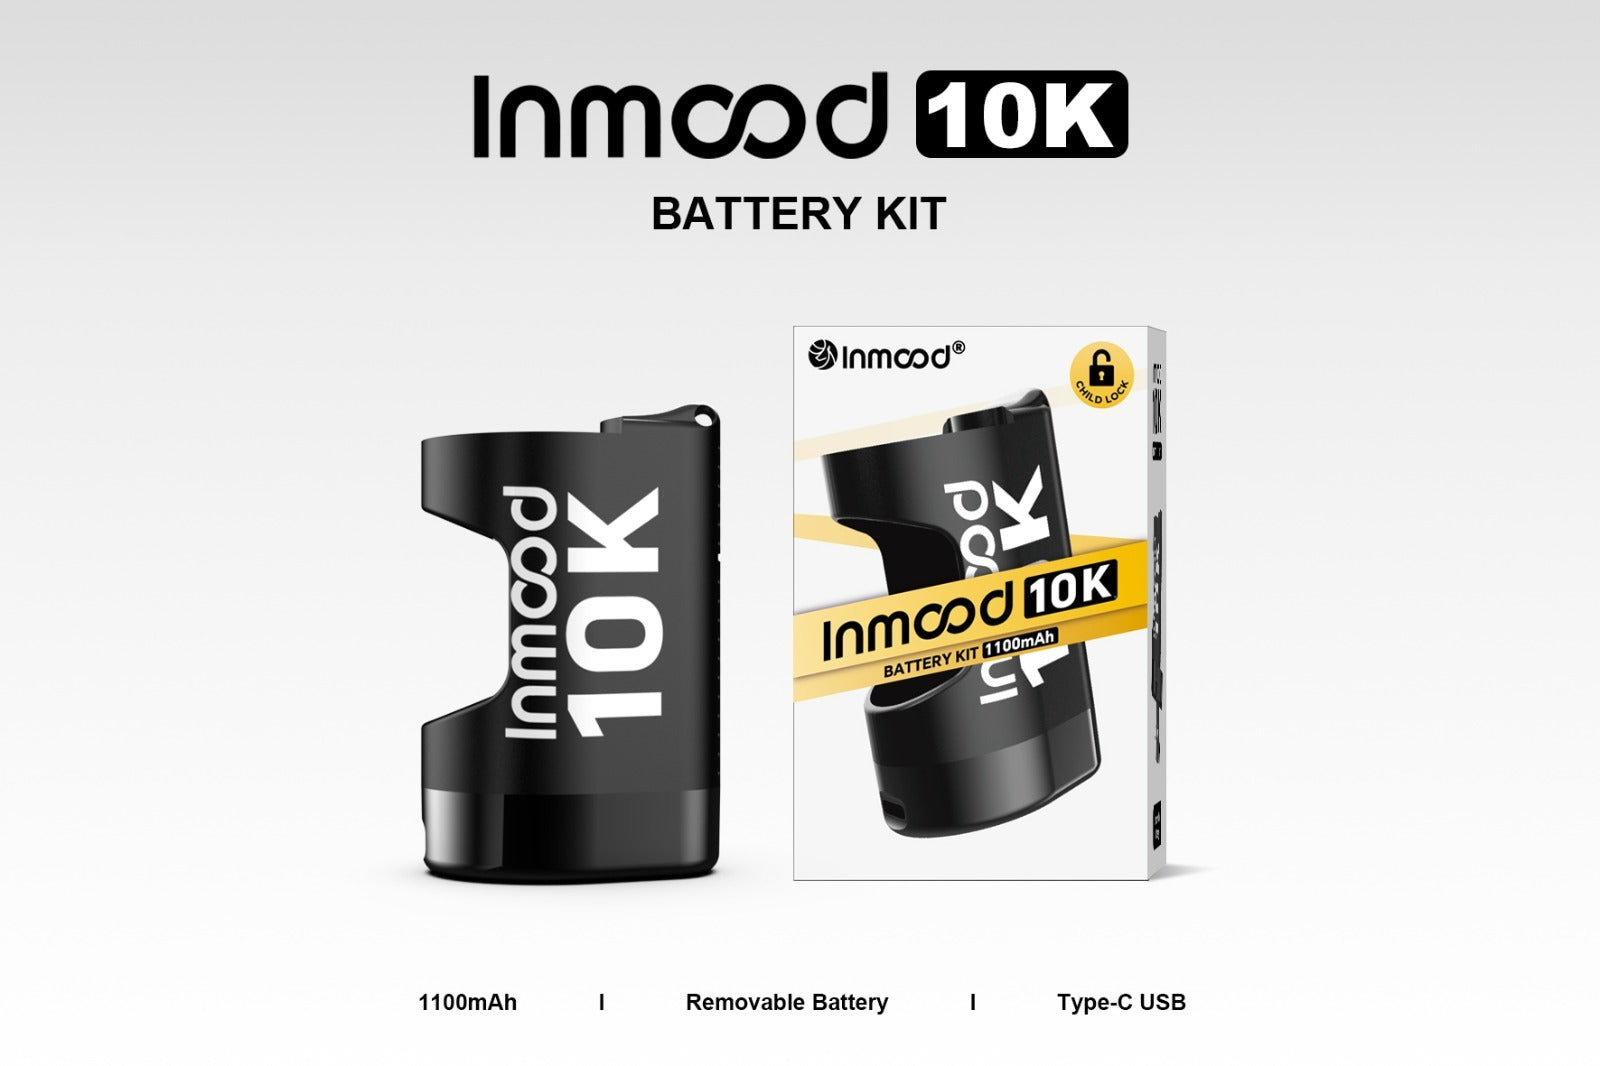 Inmood 10k Battery Black